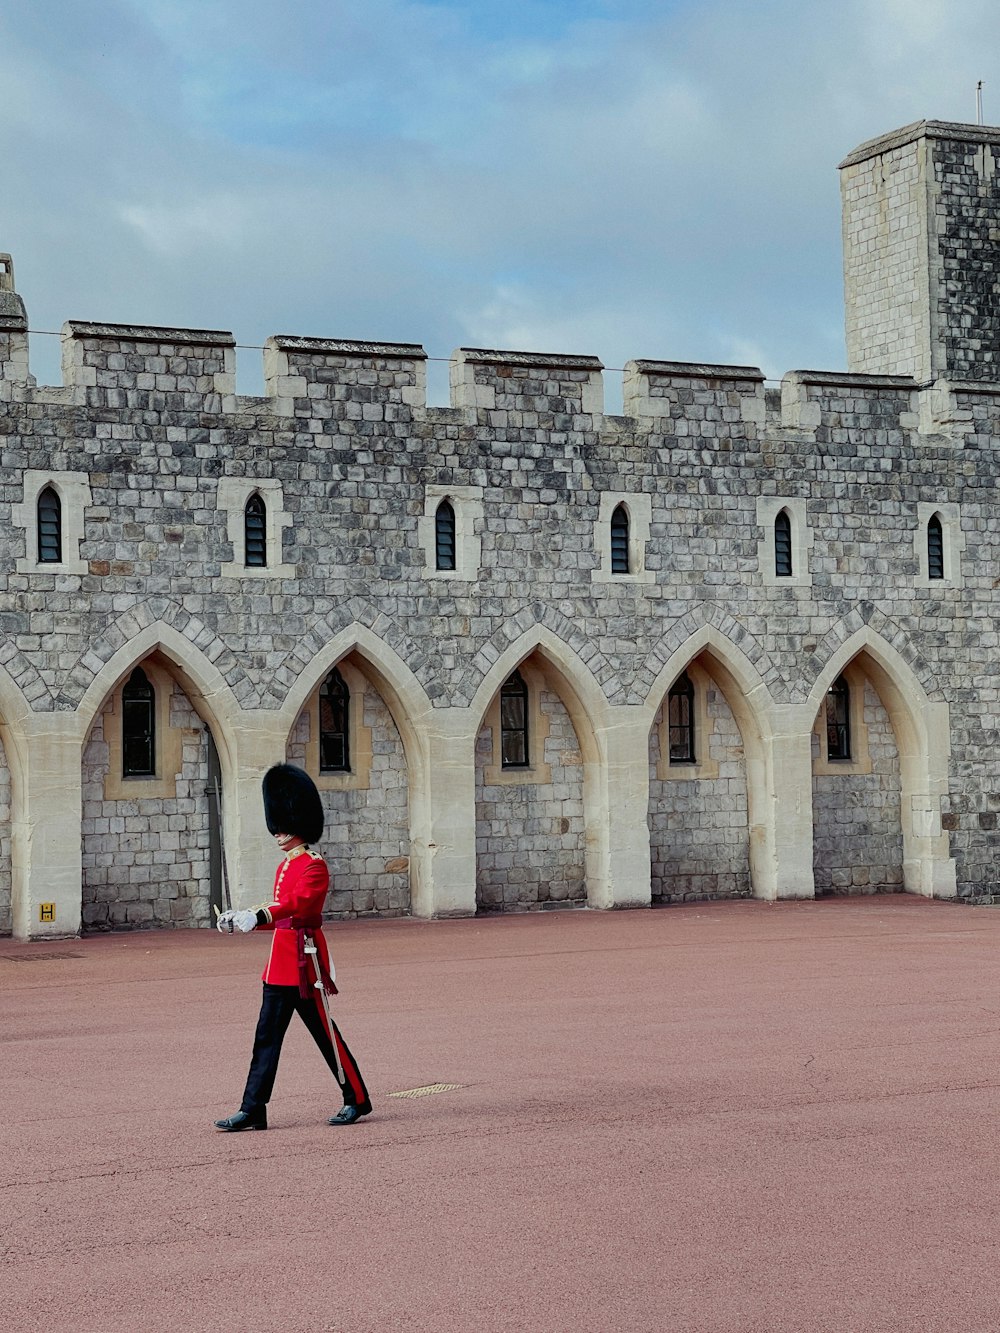 Un guardia con uniforme rojo caminando frente a un castillo